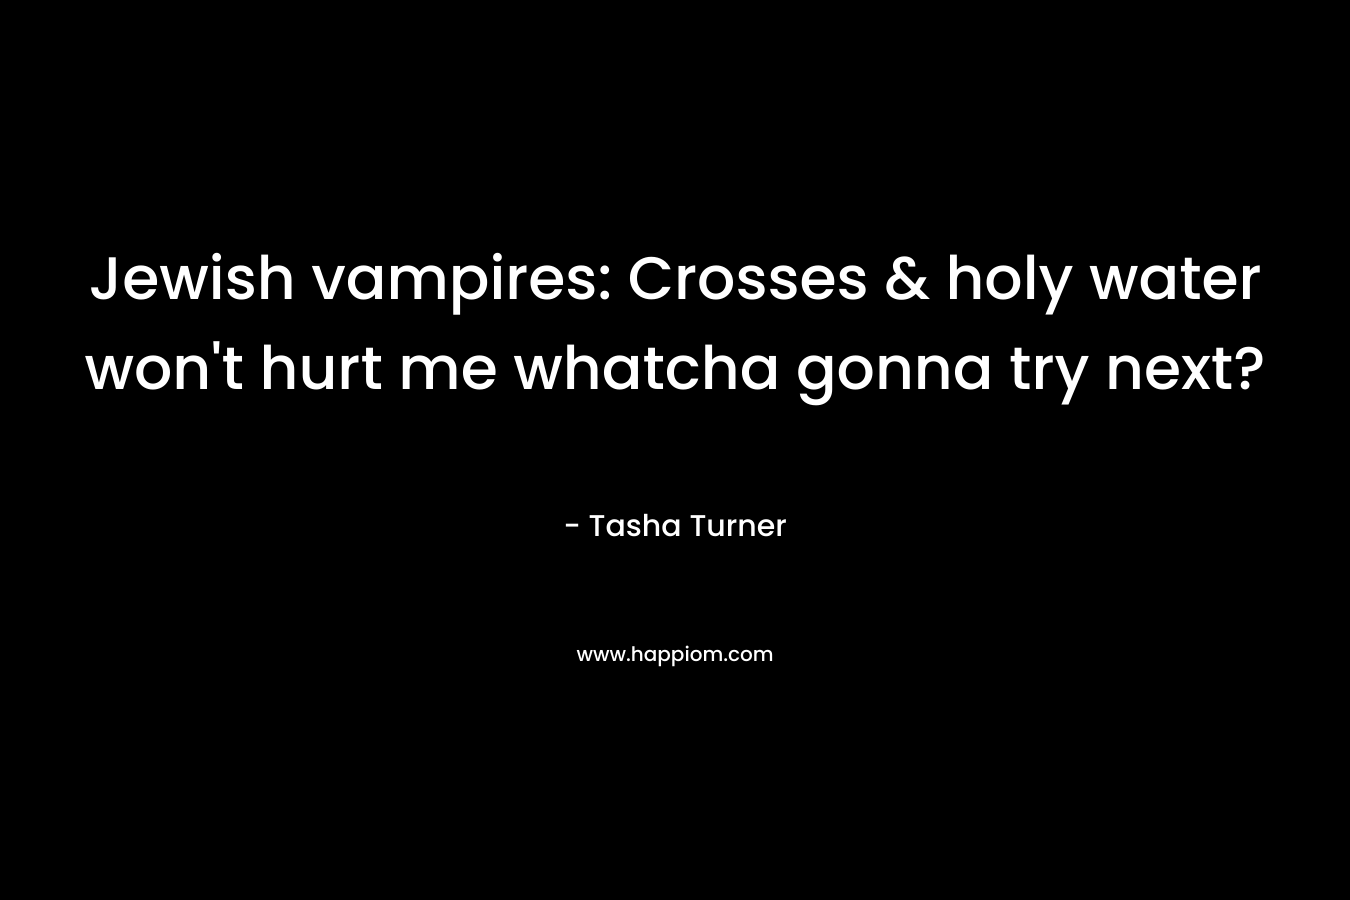 Jewish vampires: Crosses & holy water won't hurt me whatcha gonna try next?